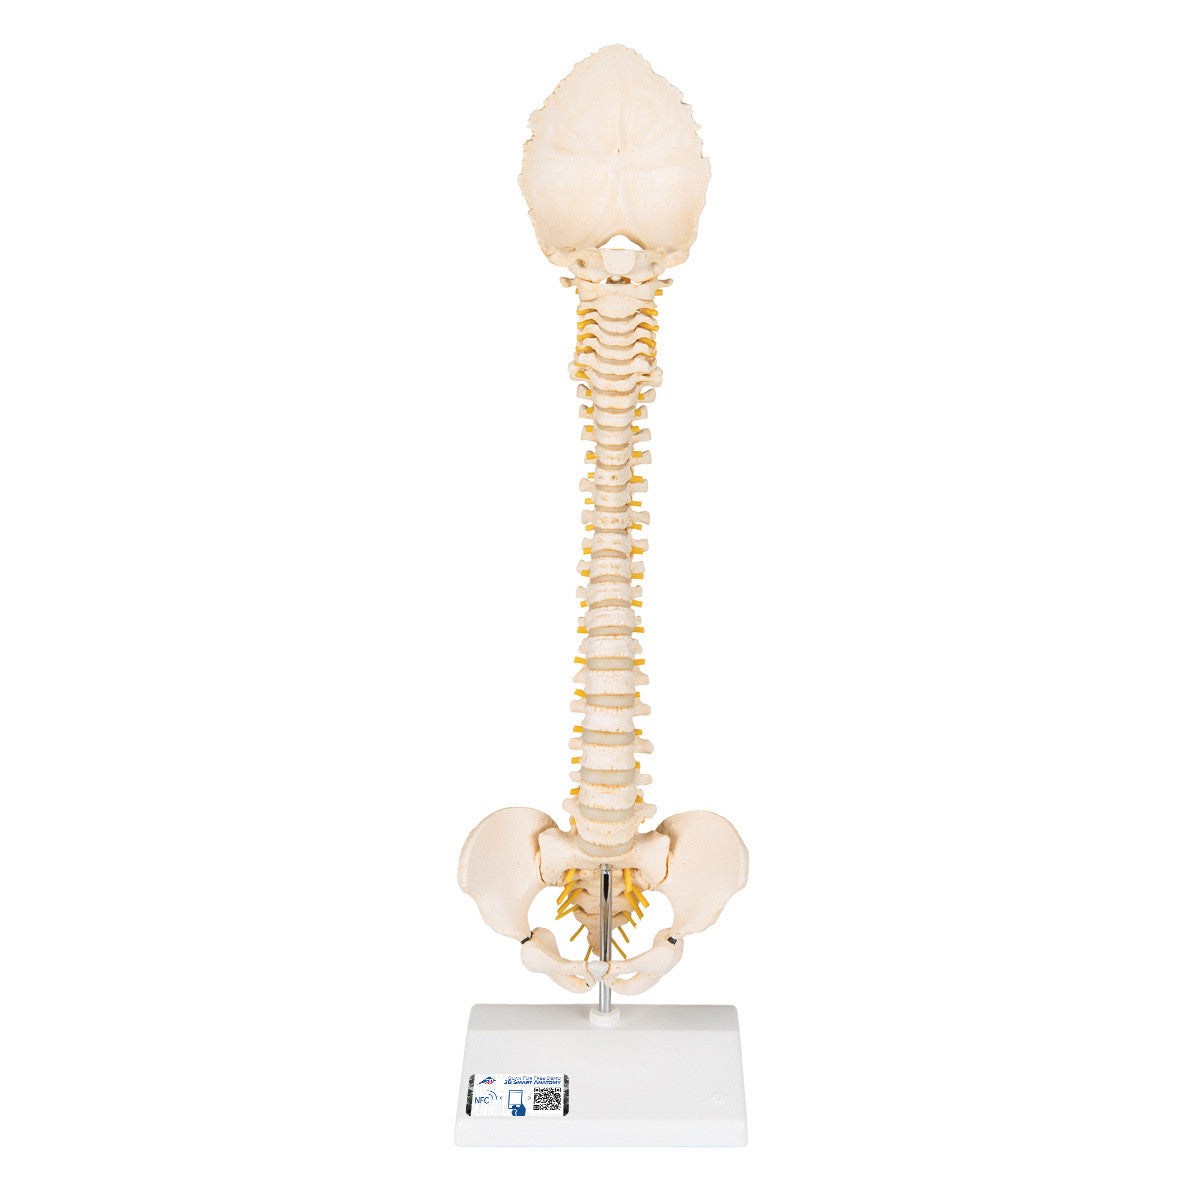 a52_01_1200_1200_bonelike-childs-vertebral-column-model-3b-smart-anatomy__23120.1589753187.1280.1280.jpg